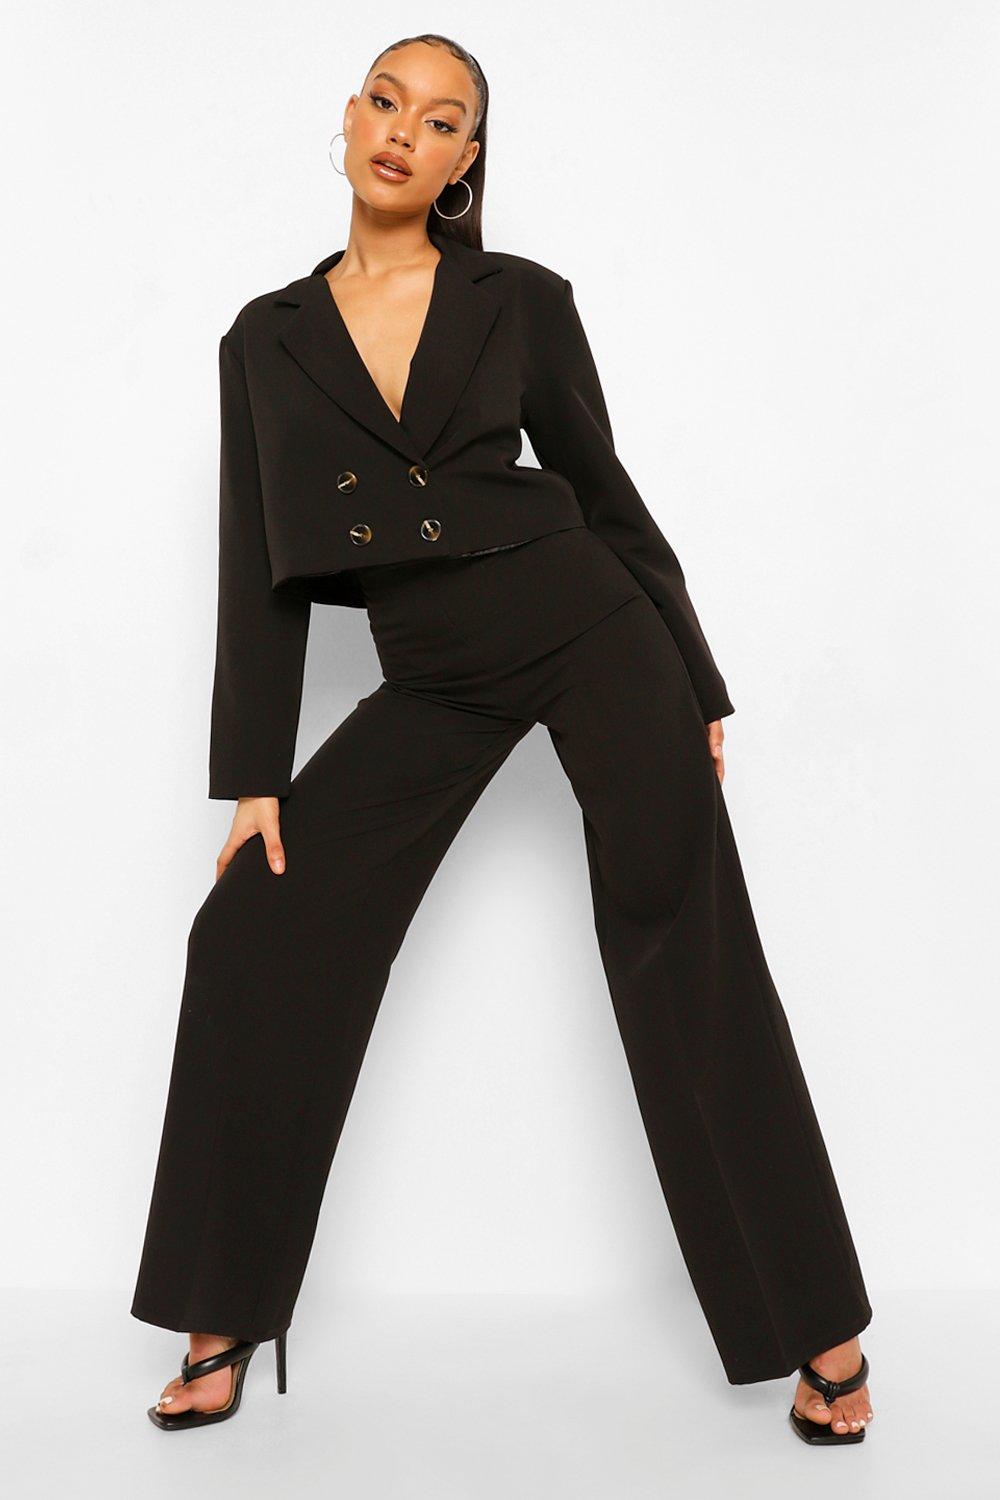 Bell Bottom Pants Suit Set With Black Blazer, Puffed Sleeve Blazer for Women,  Black Trouser Set for Women, Black Pants Suit Set Womens 